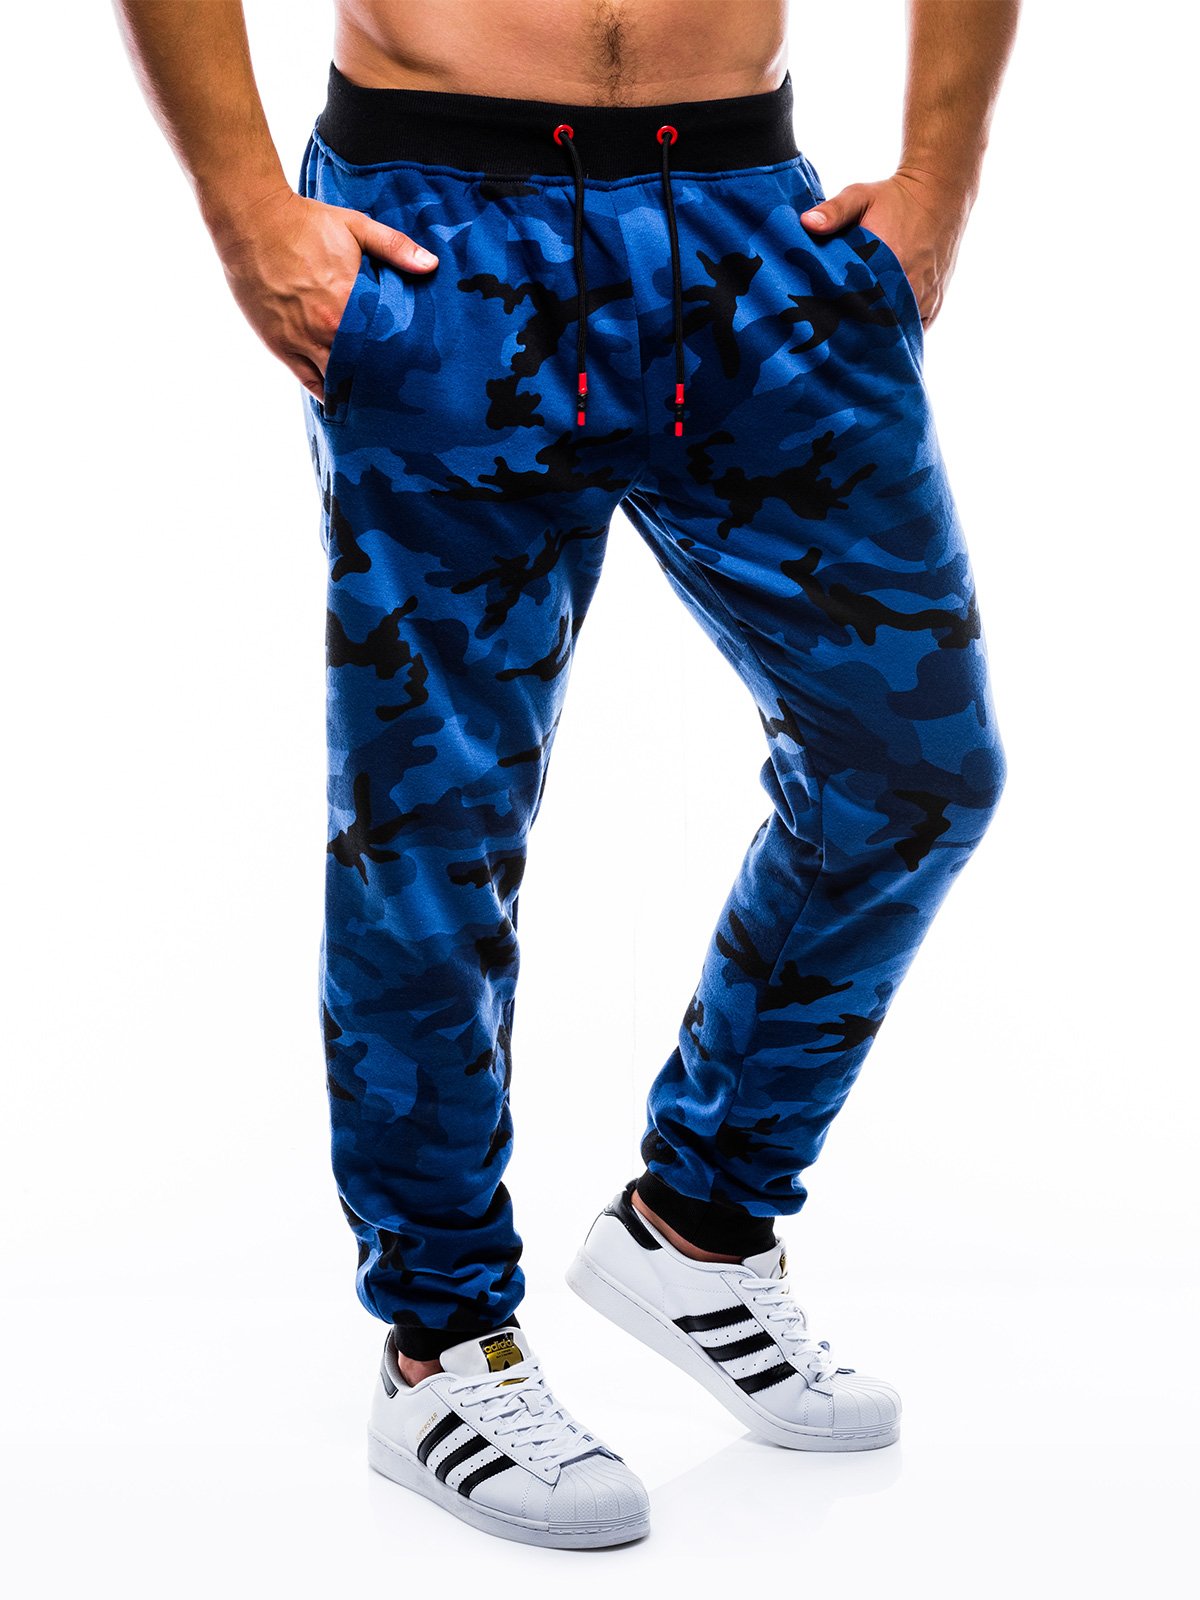 blue camouflage pants mens